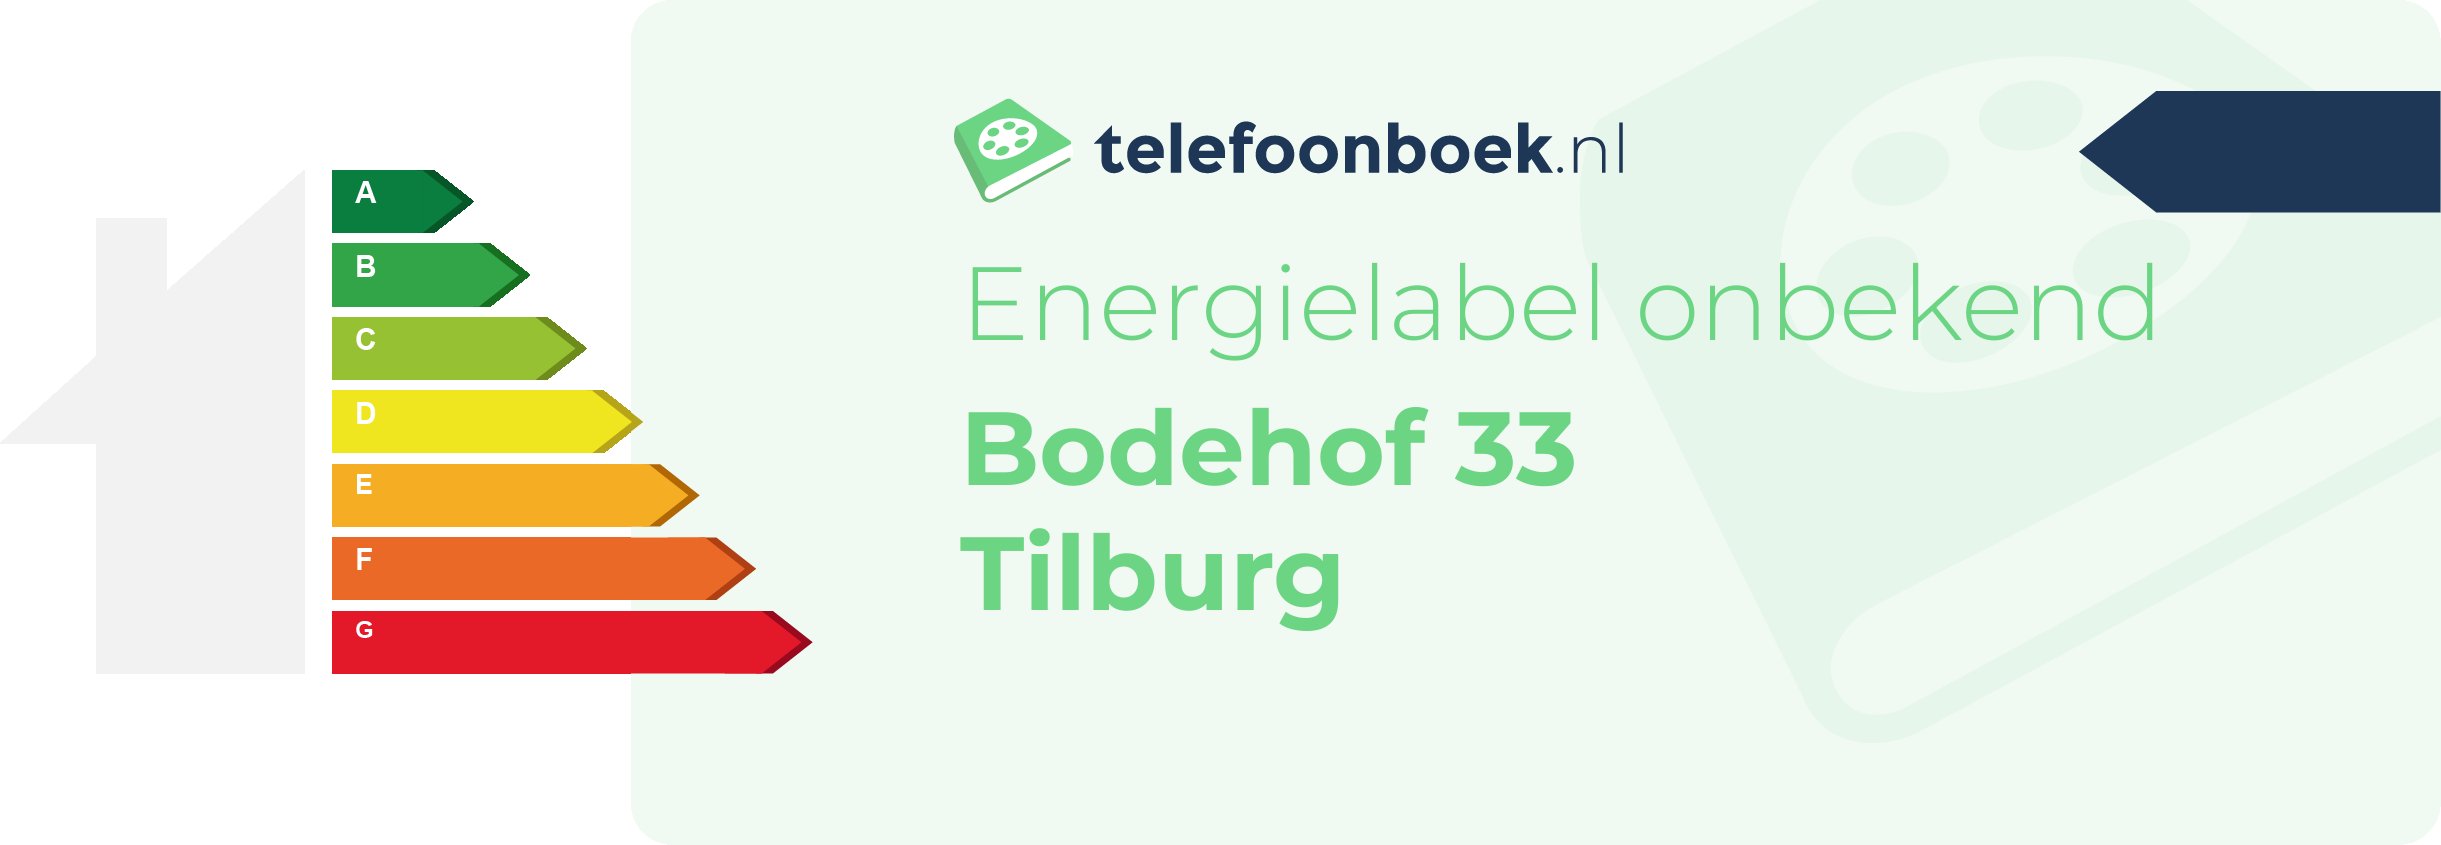 Energielabel Bodehof 33 Tilburg